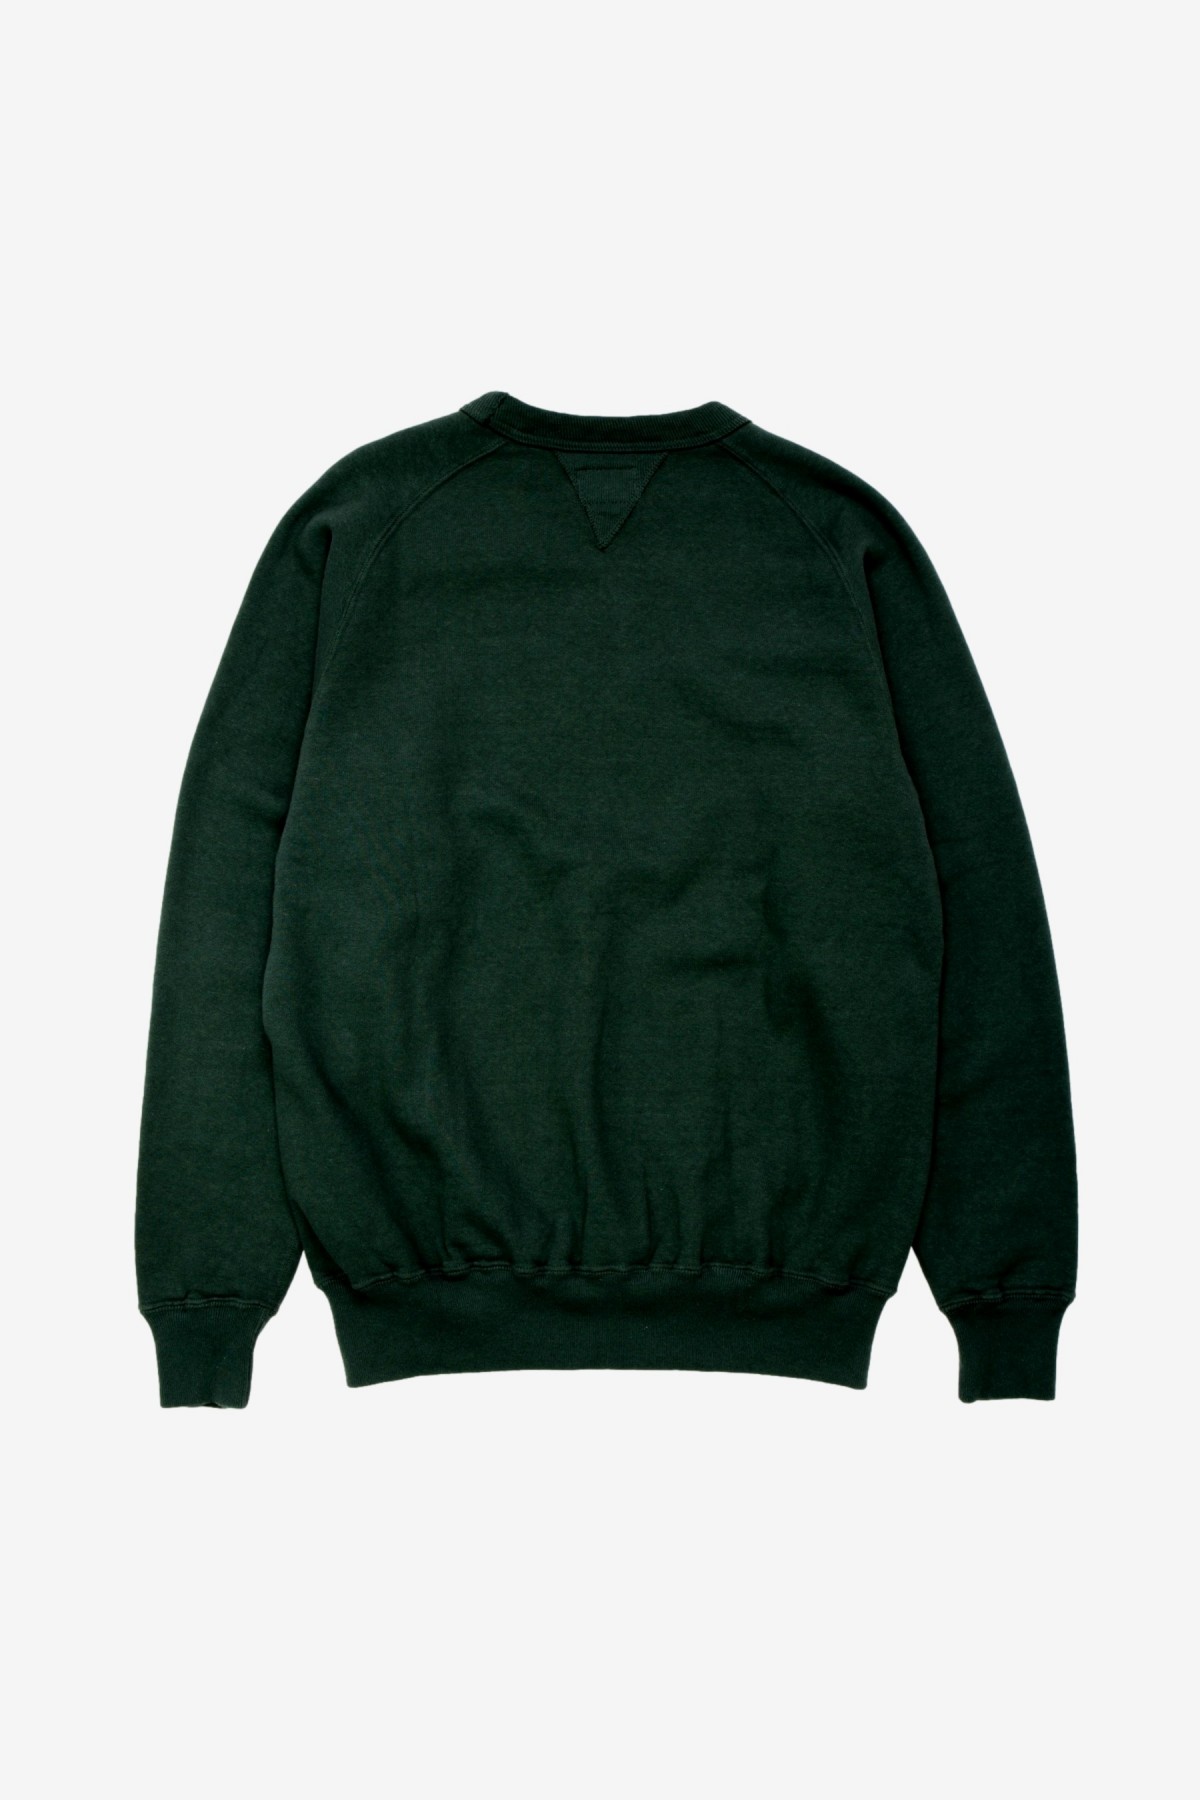 Sunray Sportswear Puamana Crewneck Sweater in Darkest Spruce